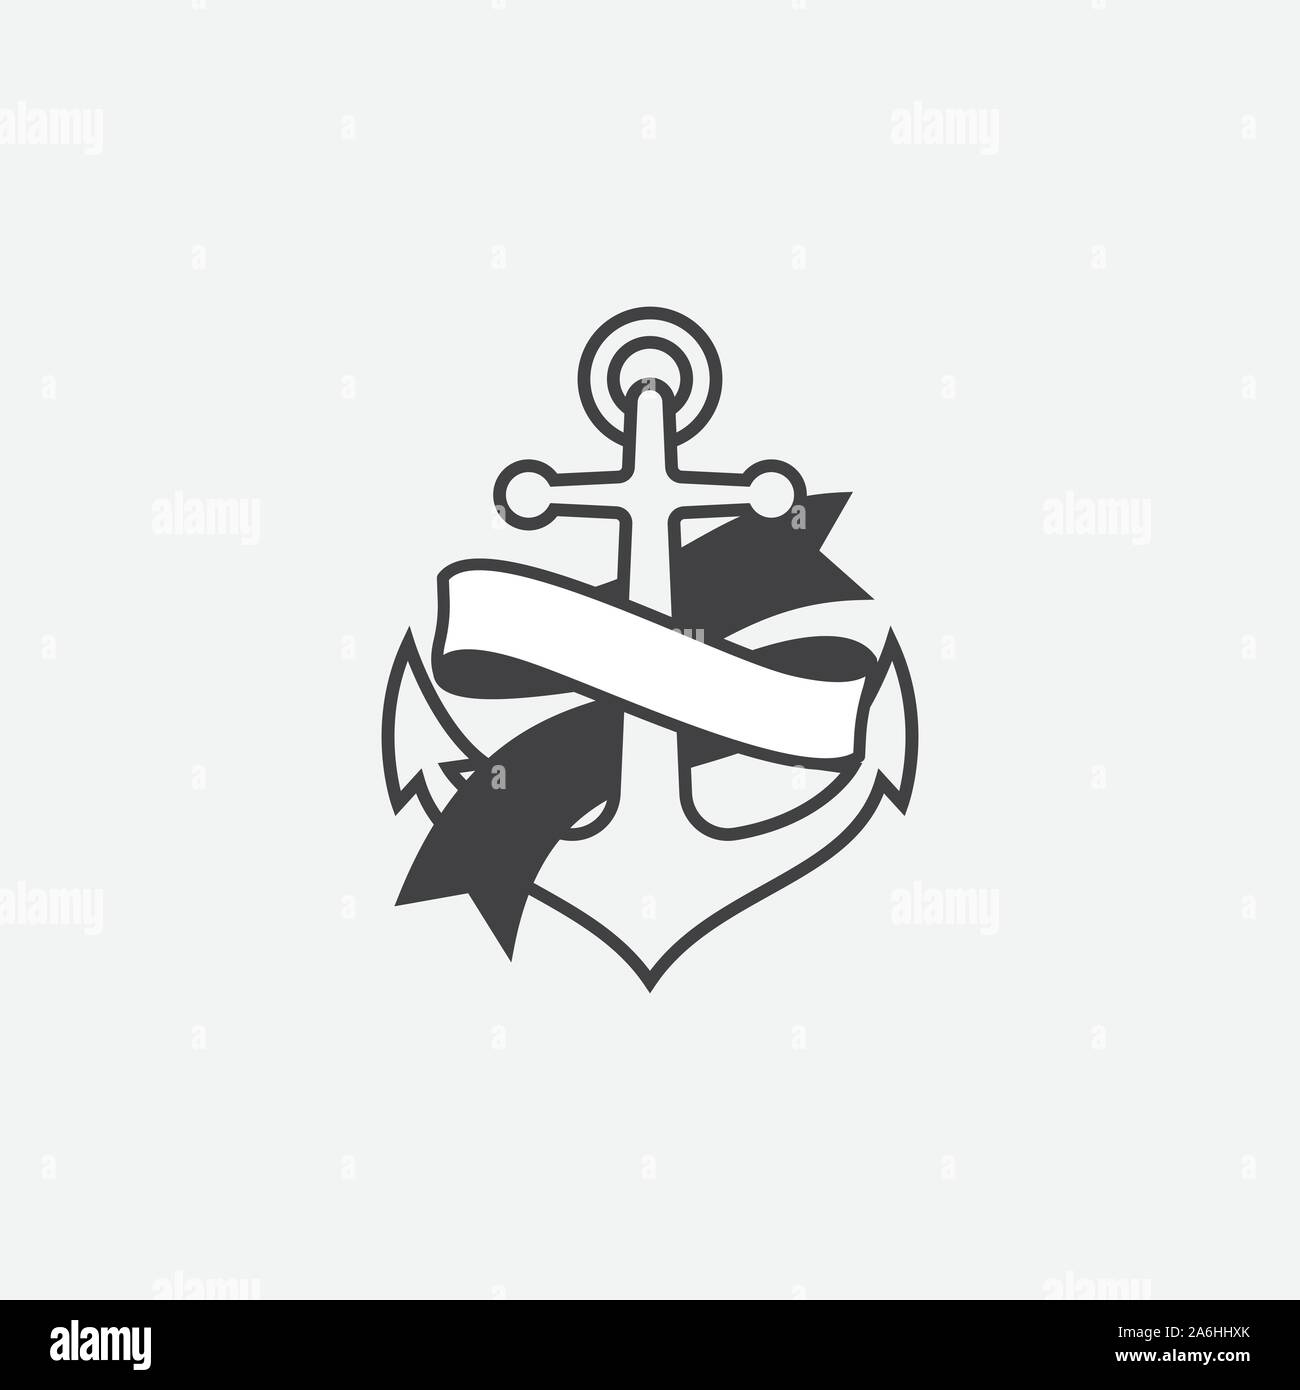 Anchor and ribbon vector logo icon, Nautical maritime, sea ocean boat illustration symbol, Anchor vector icon, Pirate Nautical maritime boat, Anchor icon, Simple vector icon Stock Vector